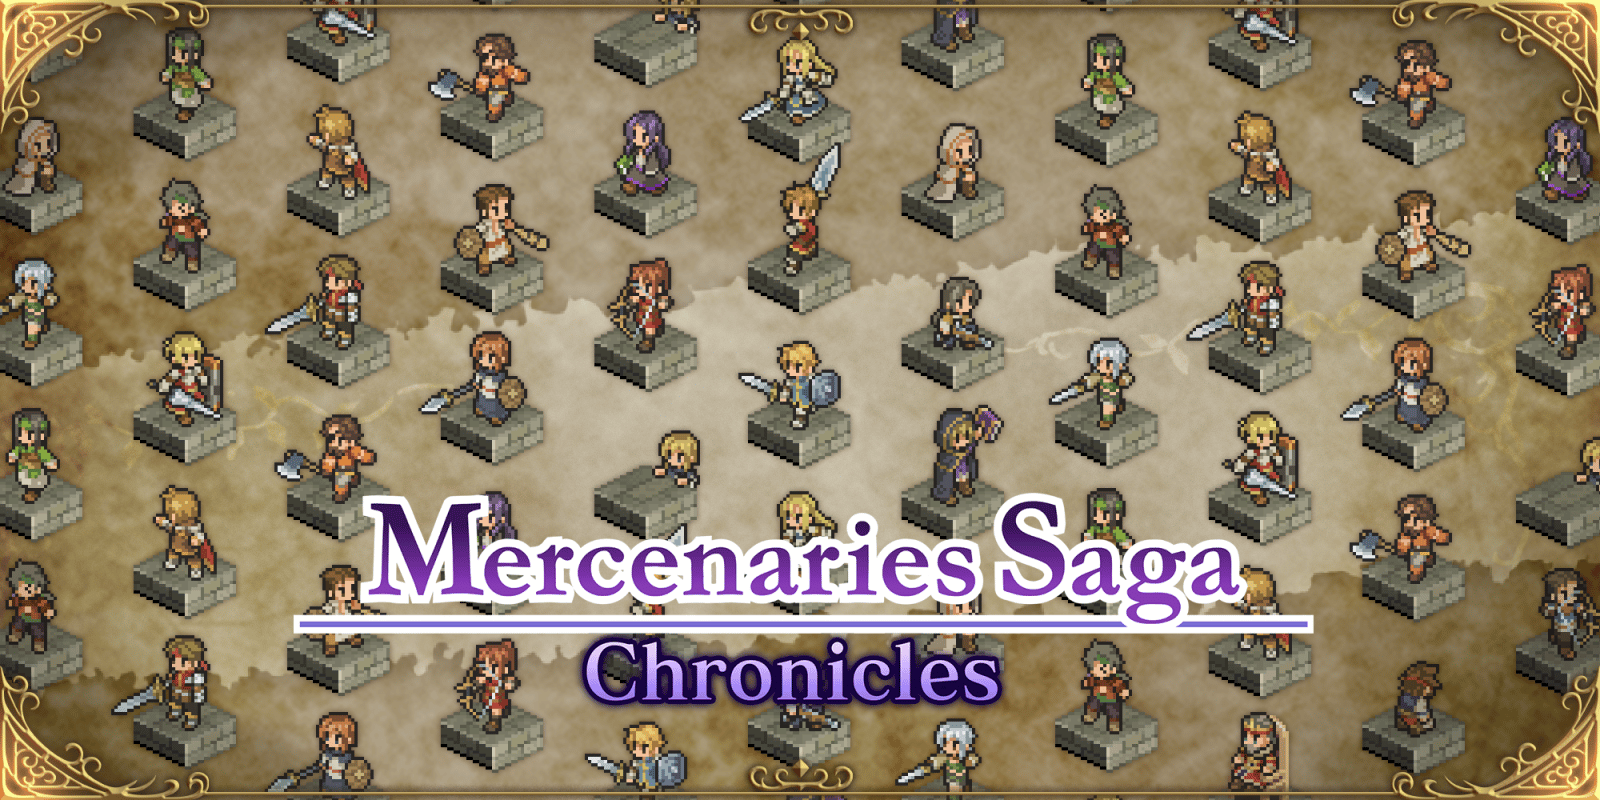 Mercenaries Saga Chronicles player count stats